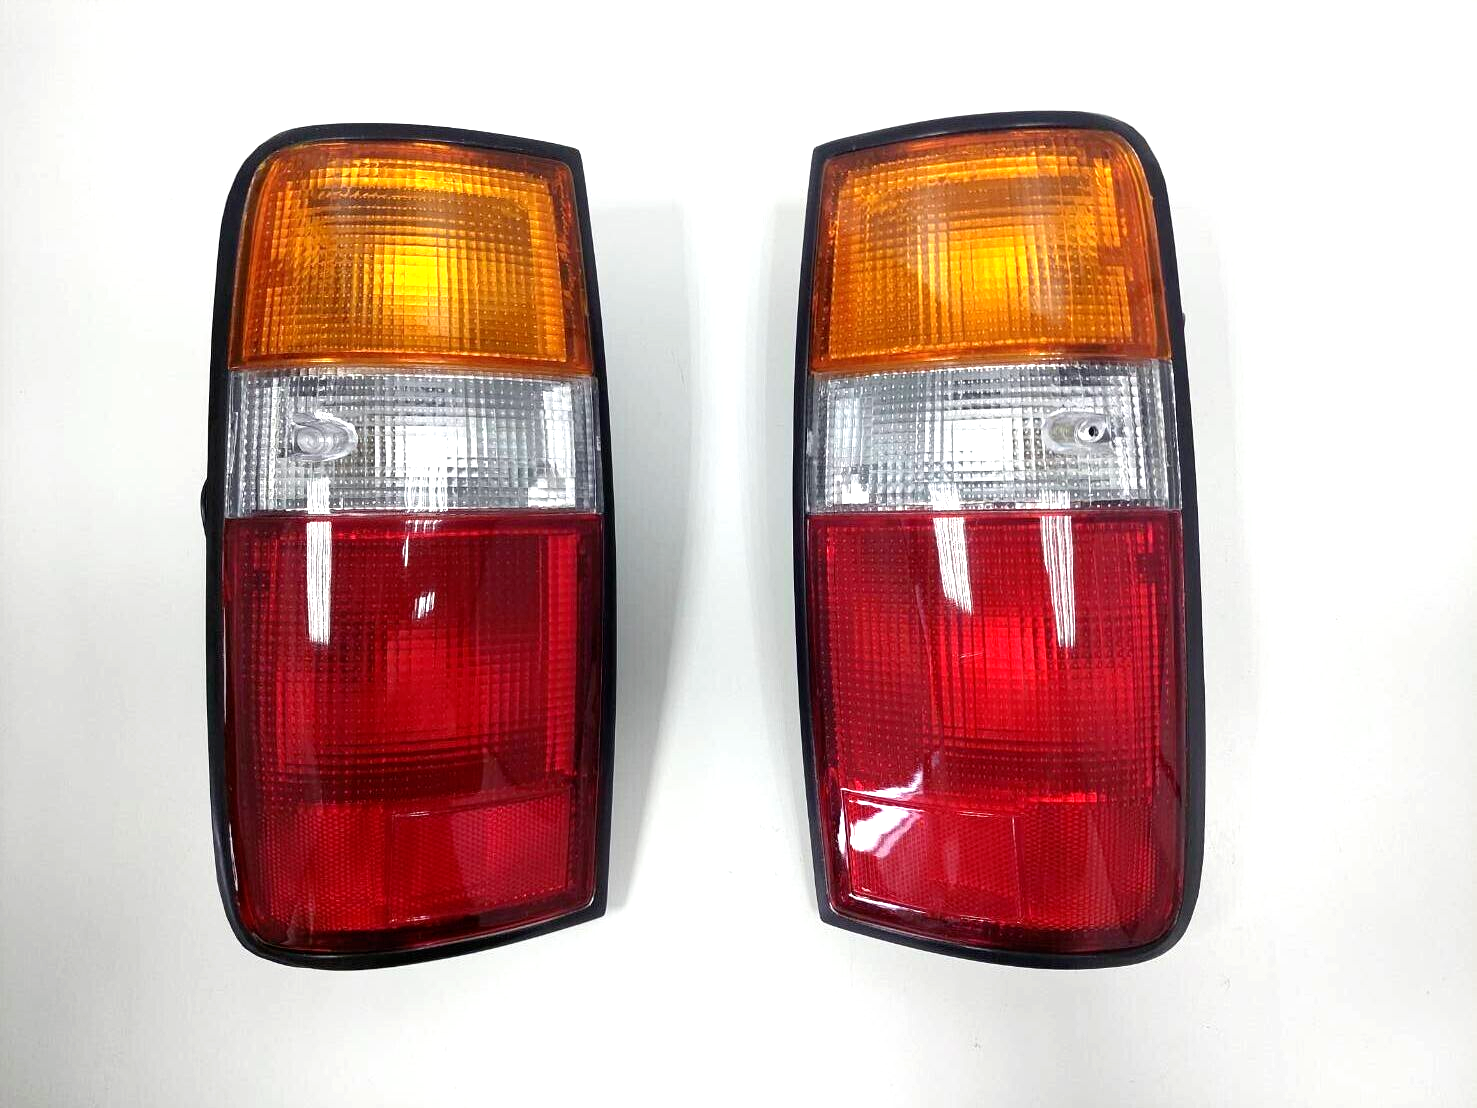 Primary image for Tail Light Rear Lamp For Toyota Land Cruiser FJ80 FJ82 Lexus LX450 1995-1997